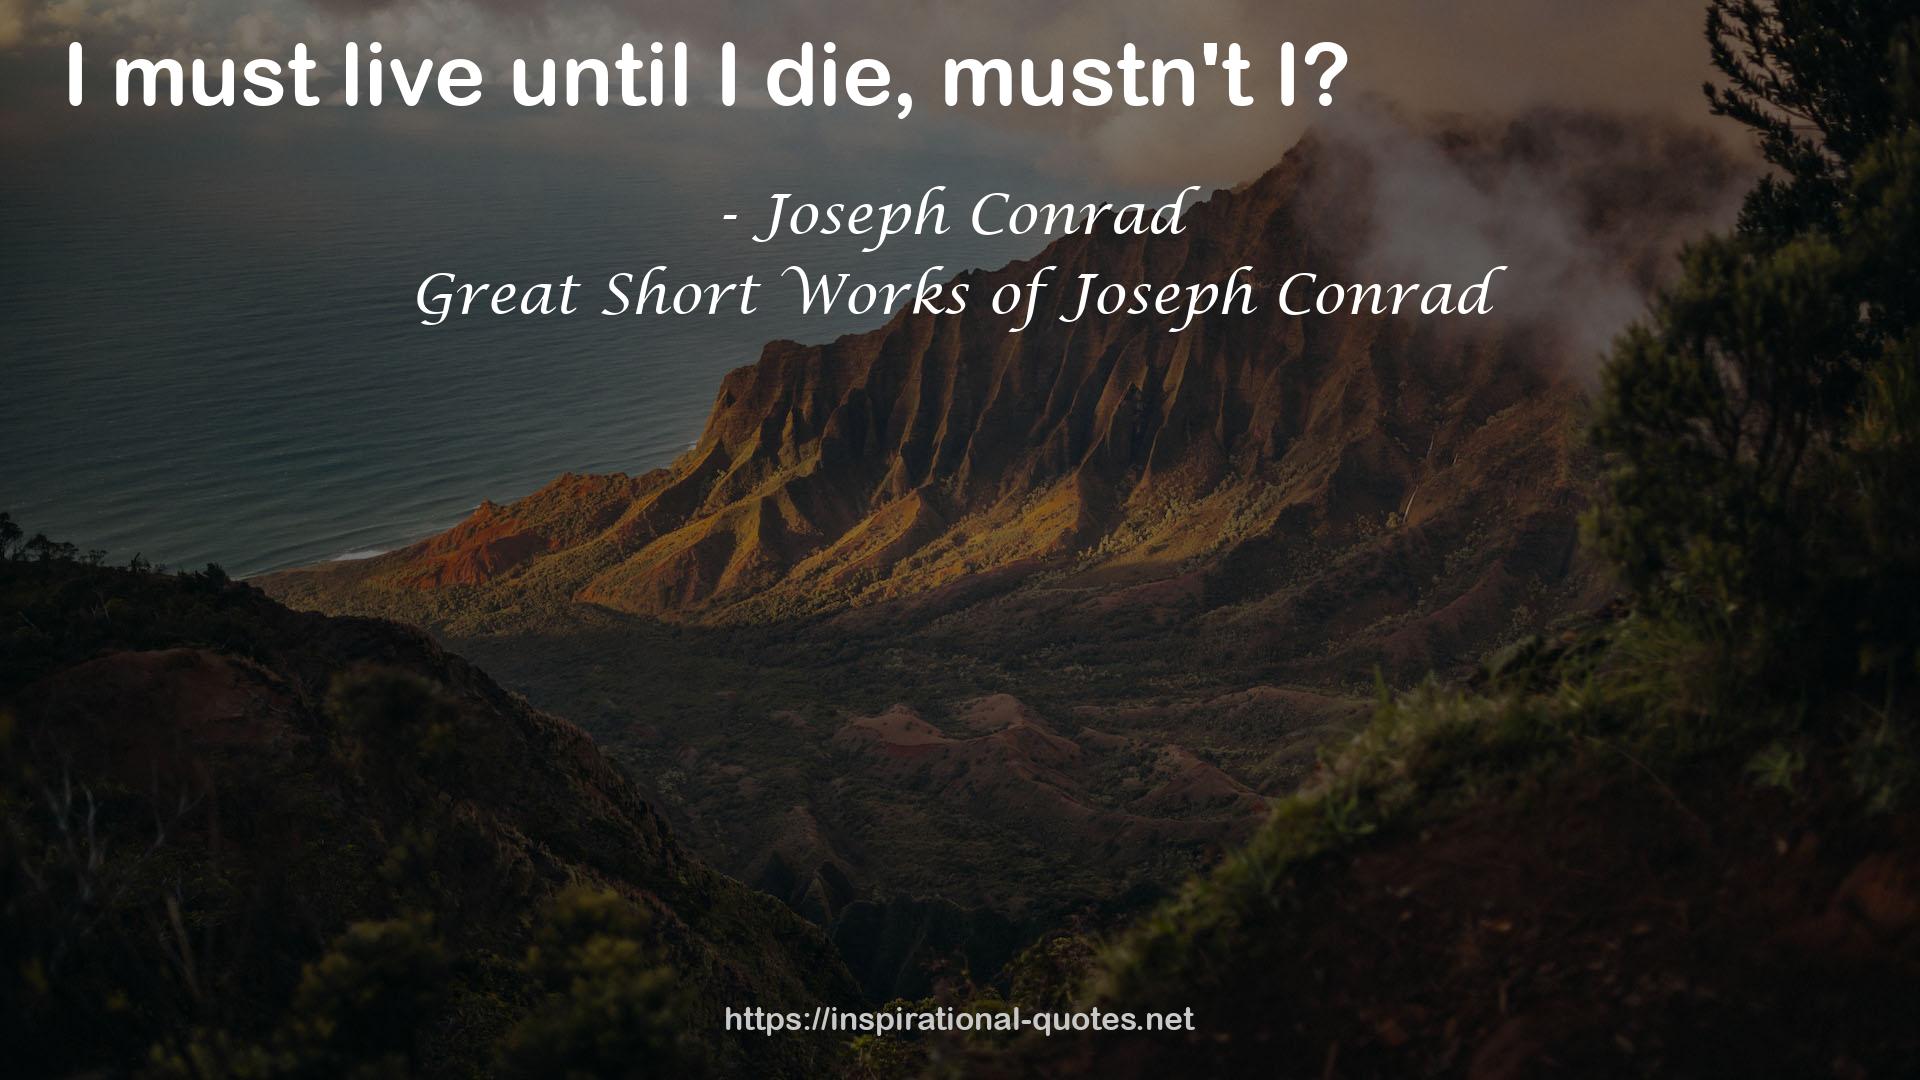 Great Short Works of Joseph Conrad QUOTES